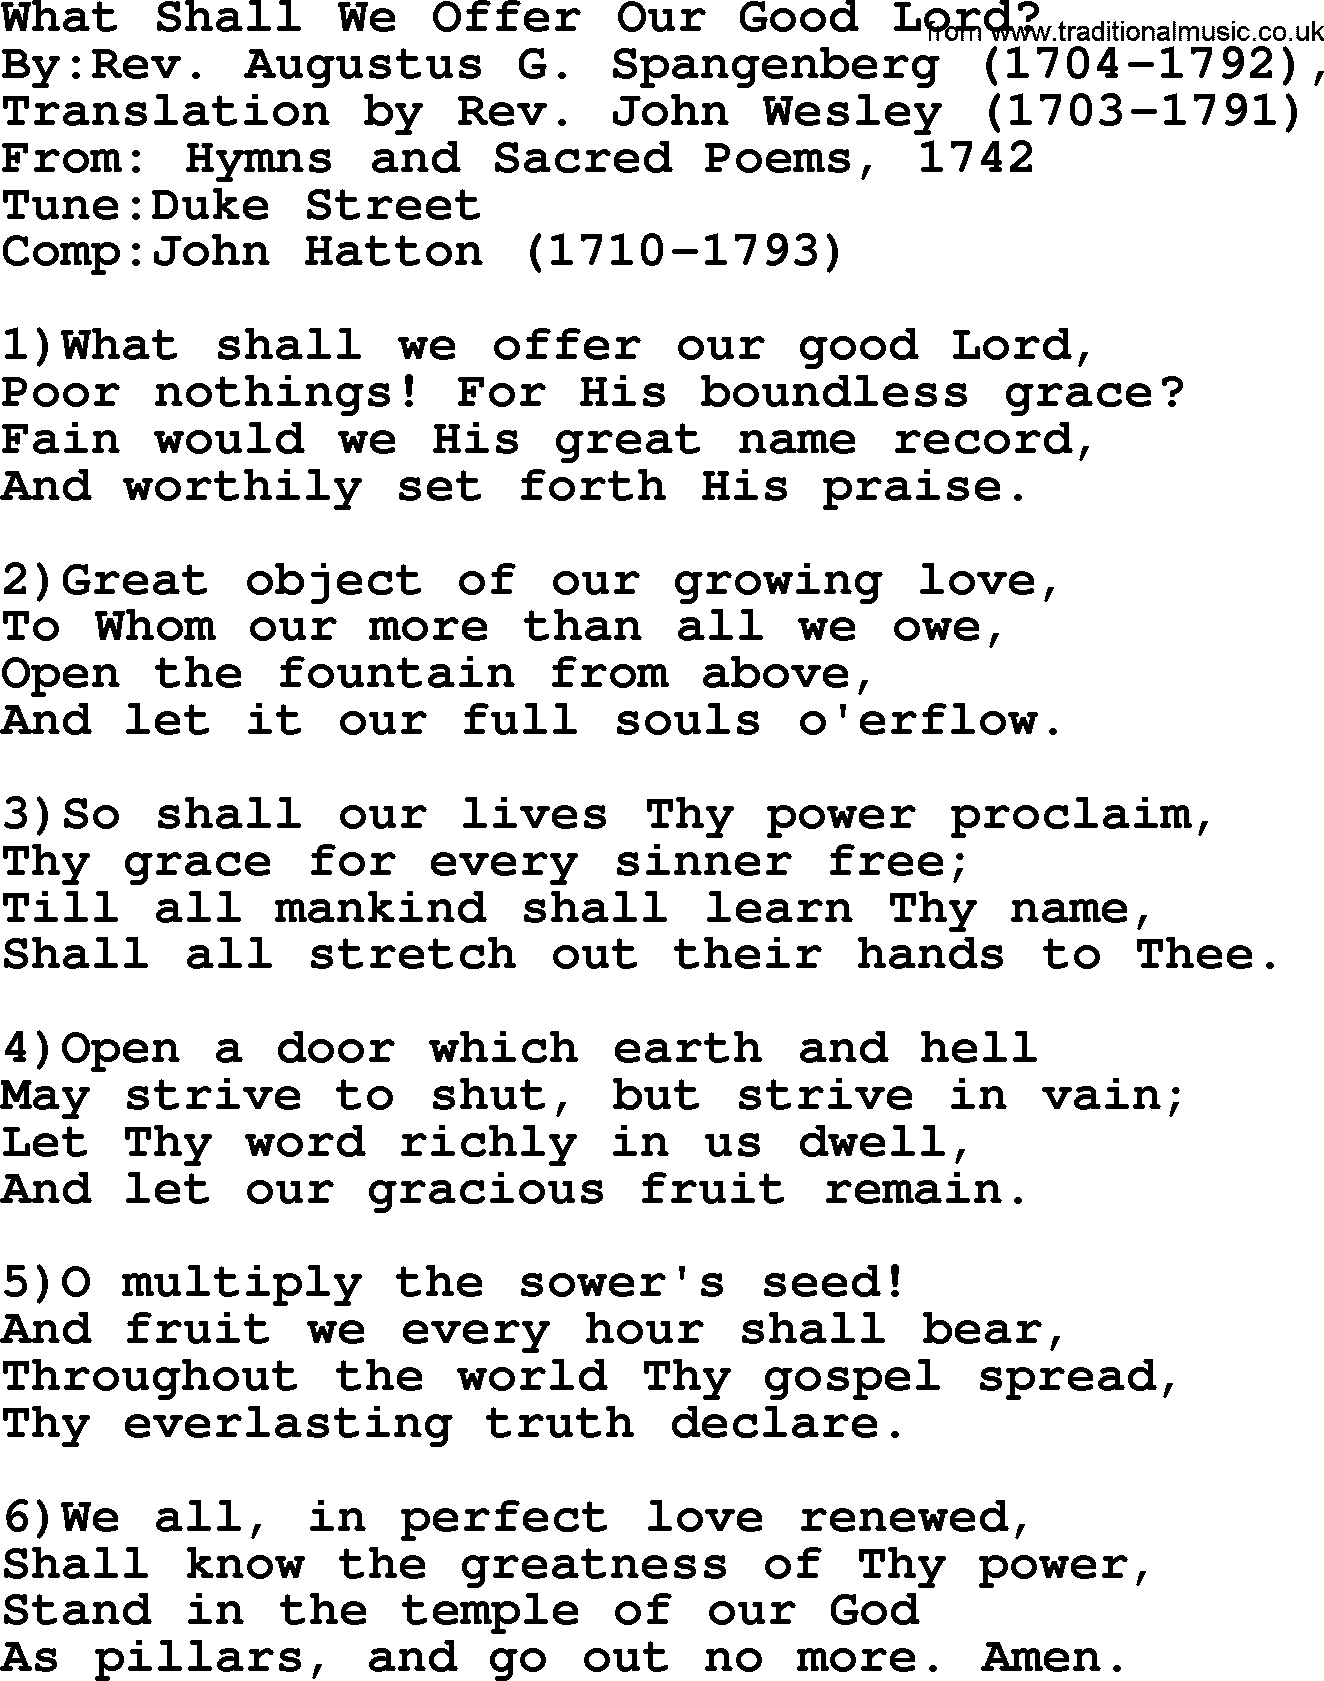 Methodist Hymn: What Shall We Offer Our Good Lord, lyrics